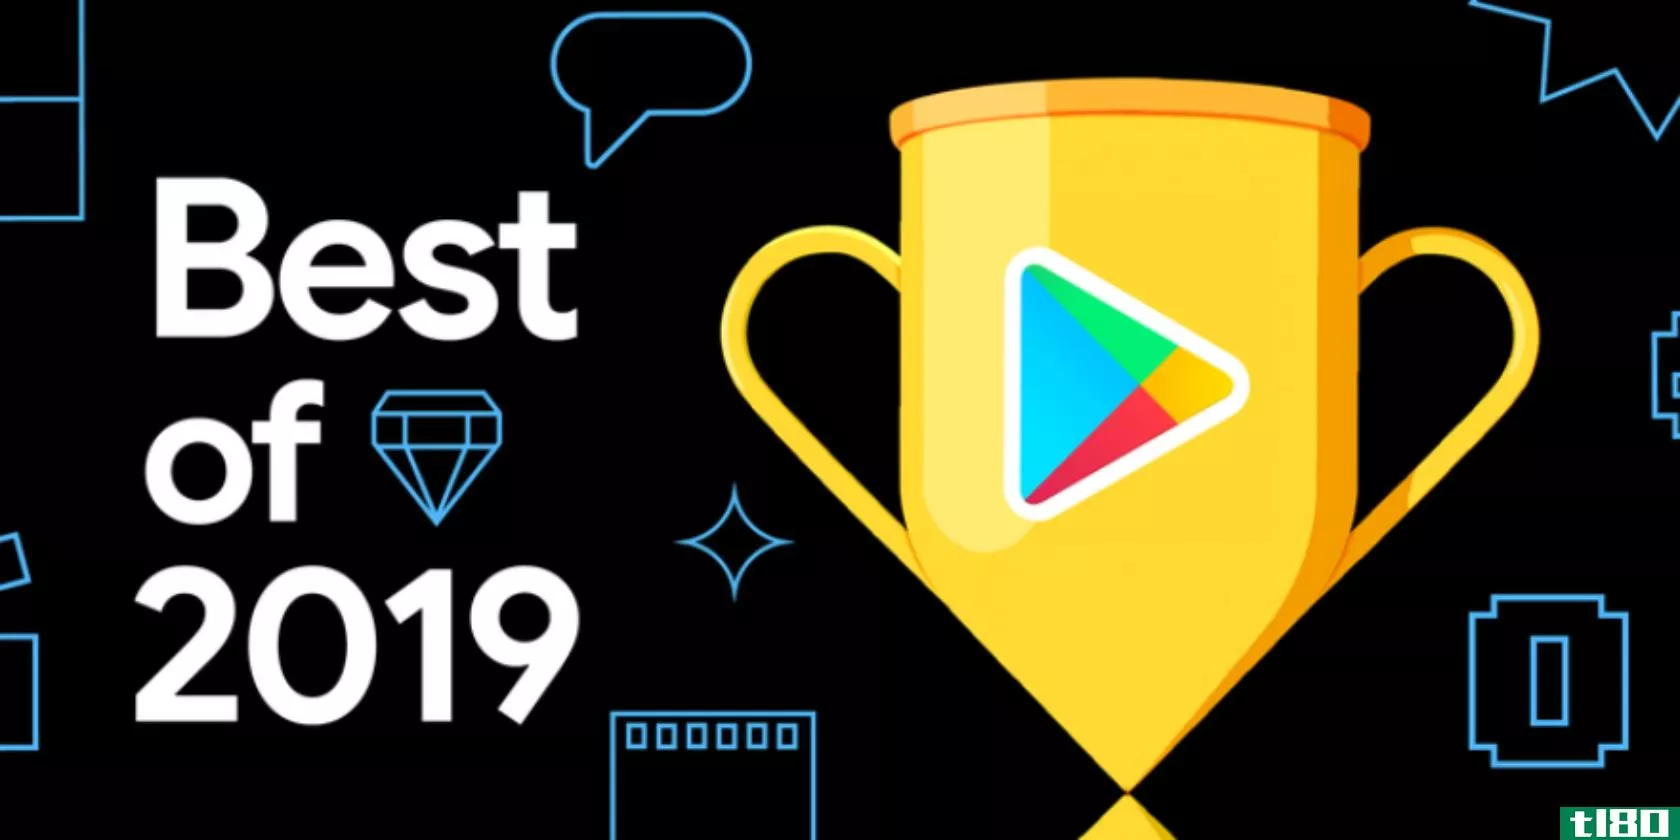 google-play-best-of-2019